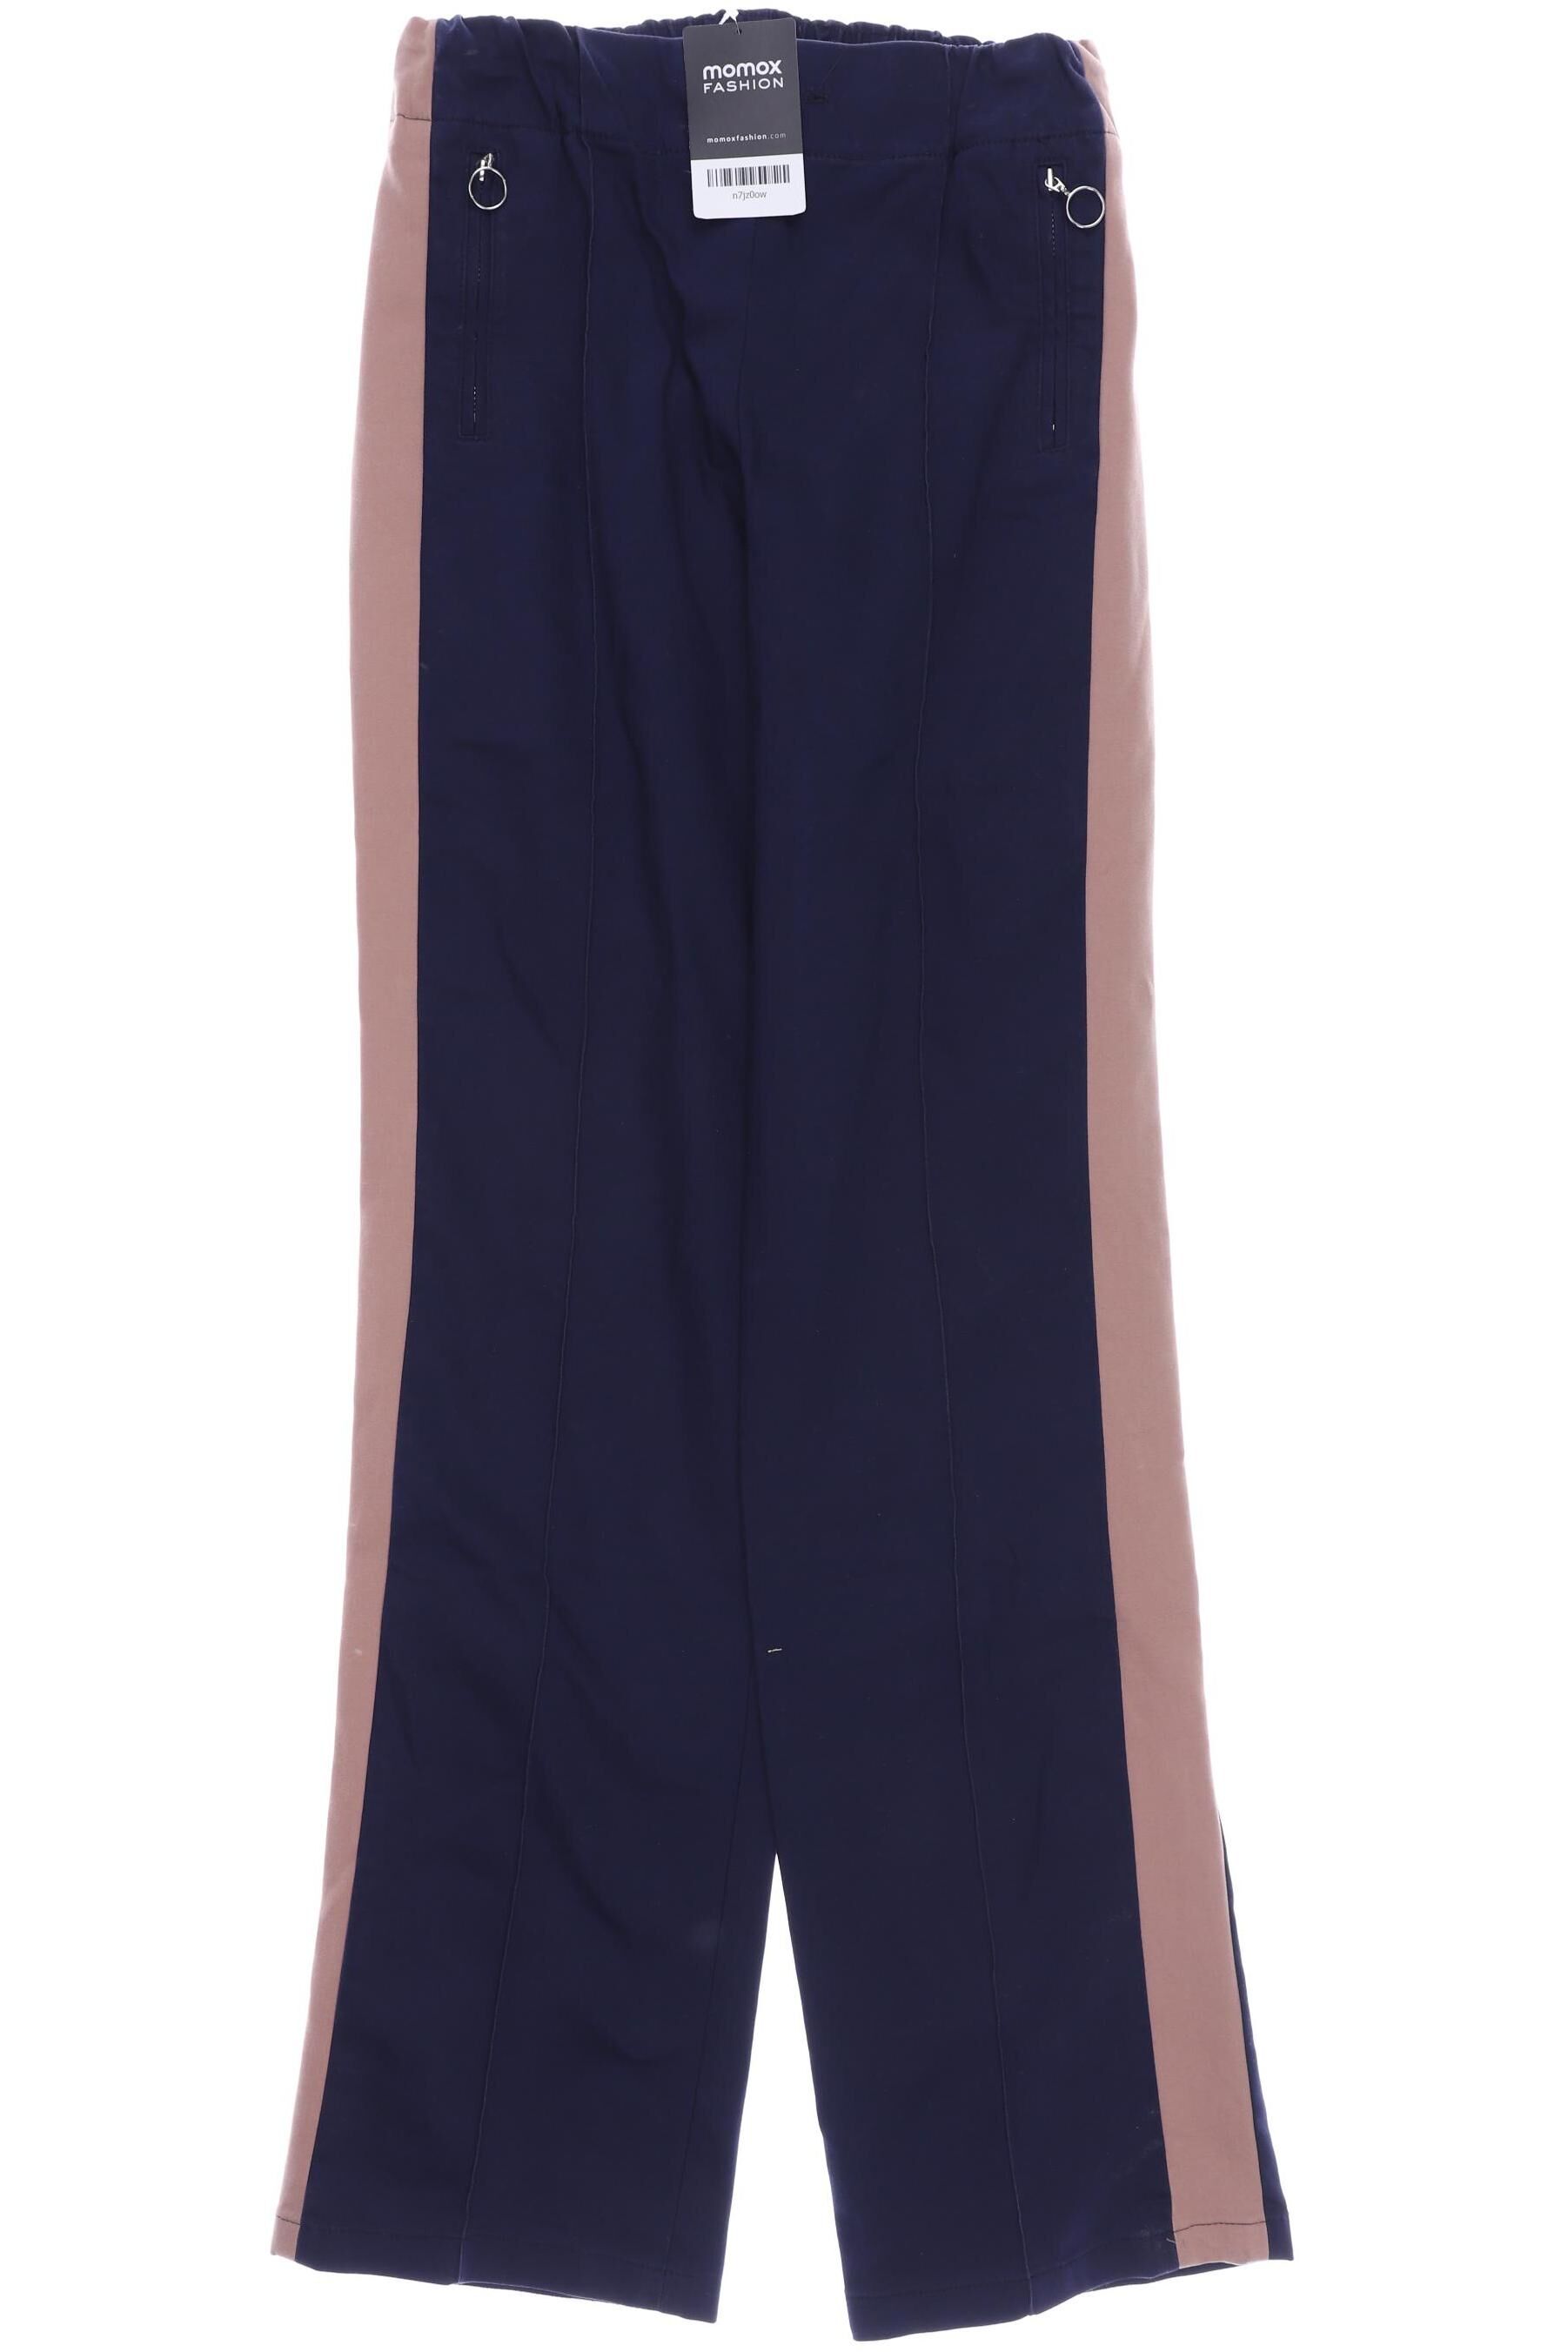 Drykorn Pantalon classique femme, bleu marine 37